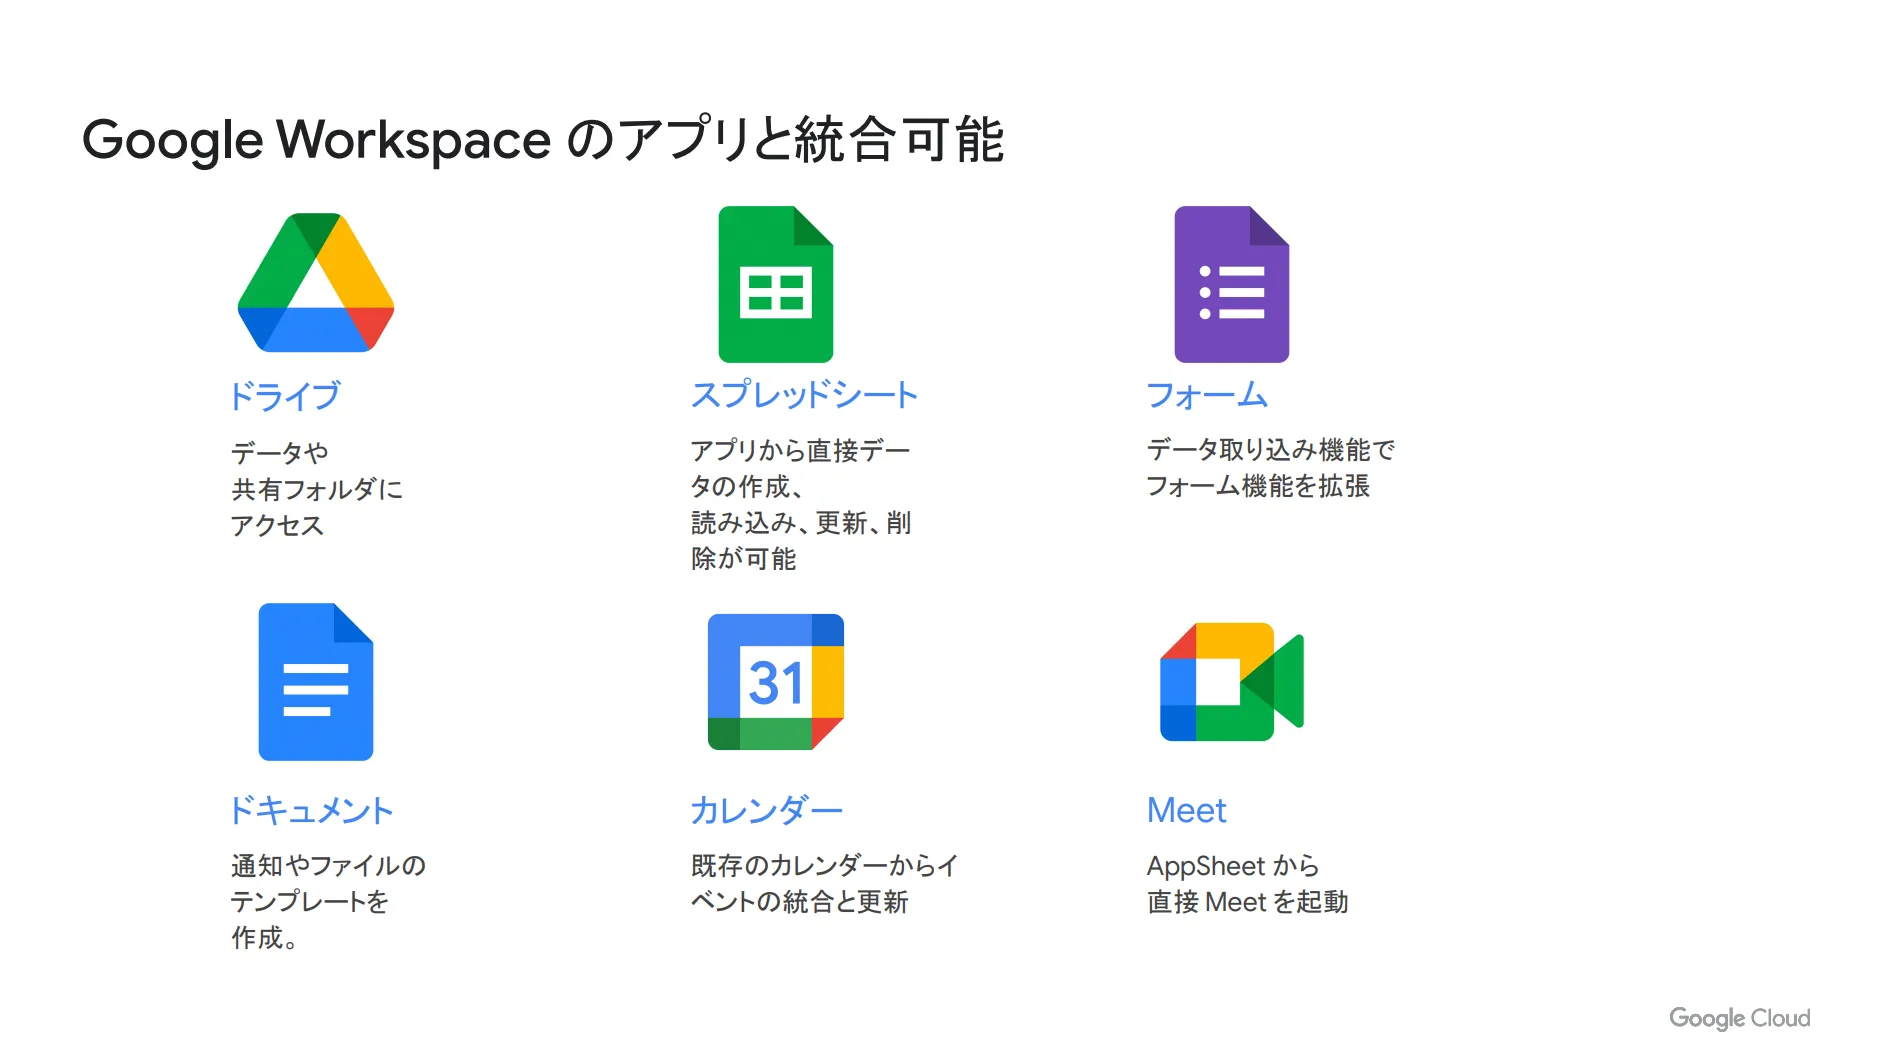 Google Workspace の各機能とシームレスに連携